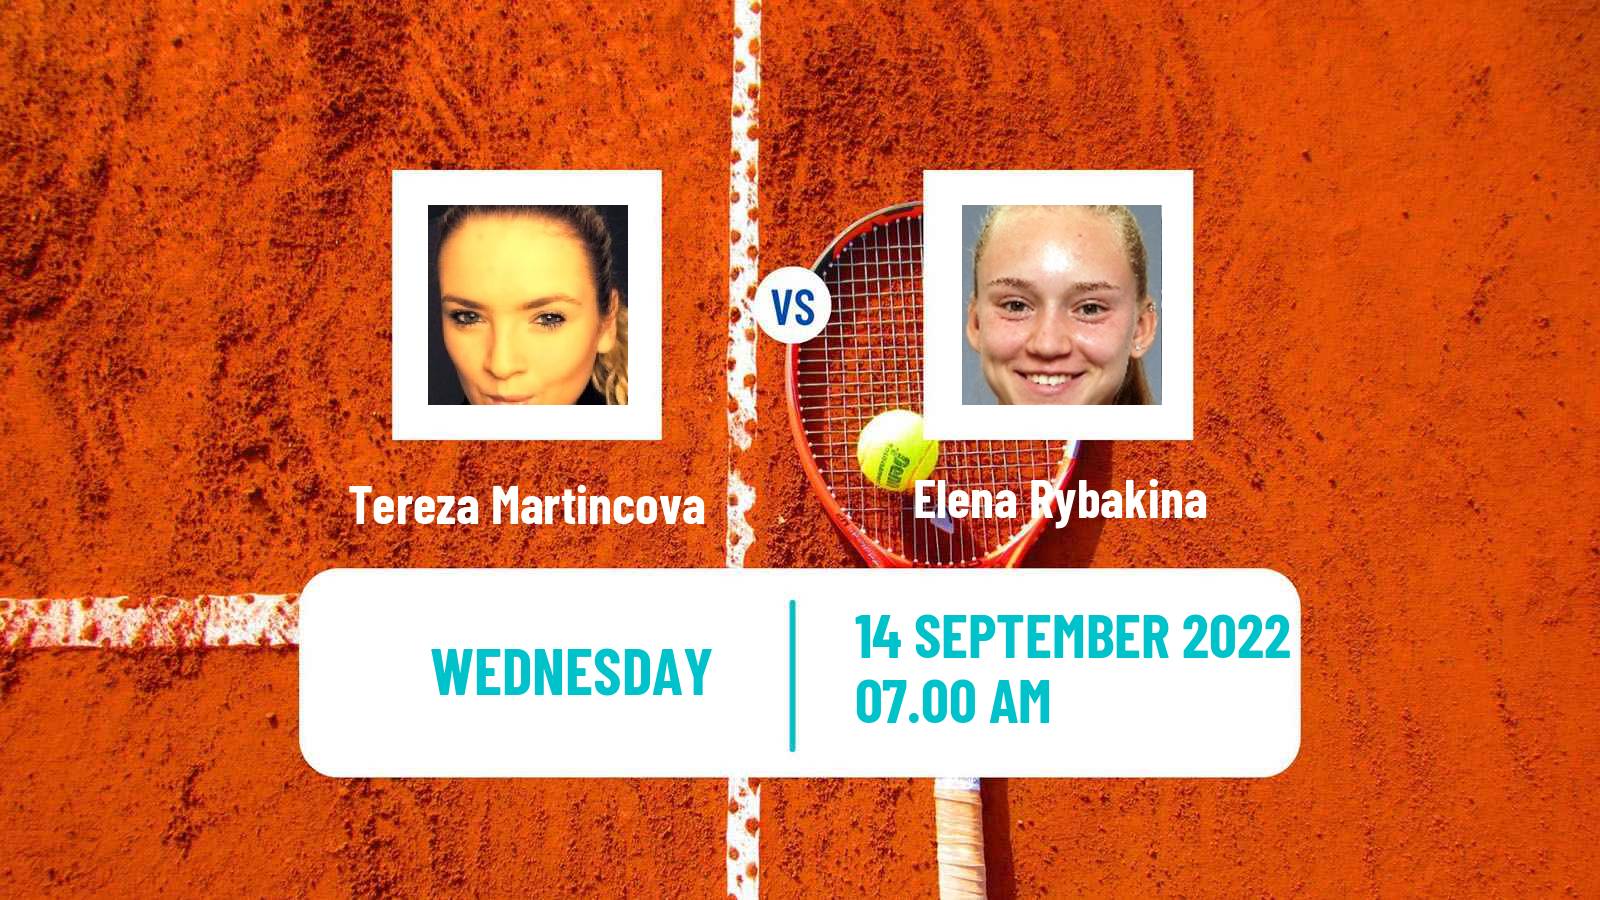 Tennis WTA Portoroz Tereza Martincova - Elena Rybakina